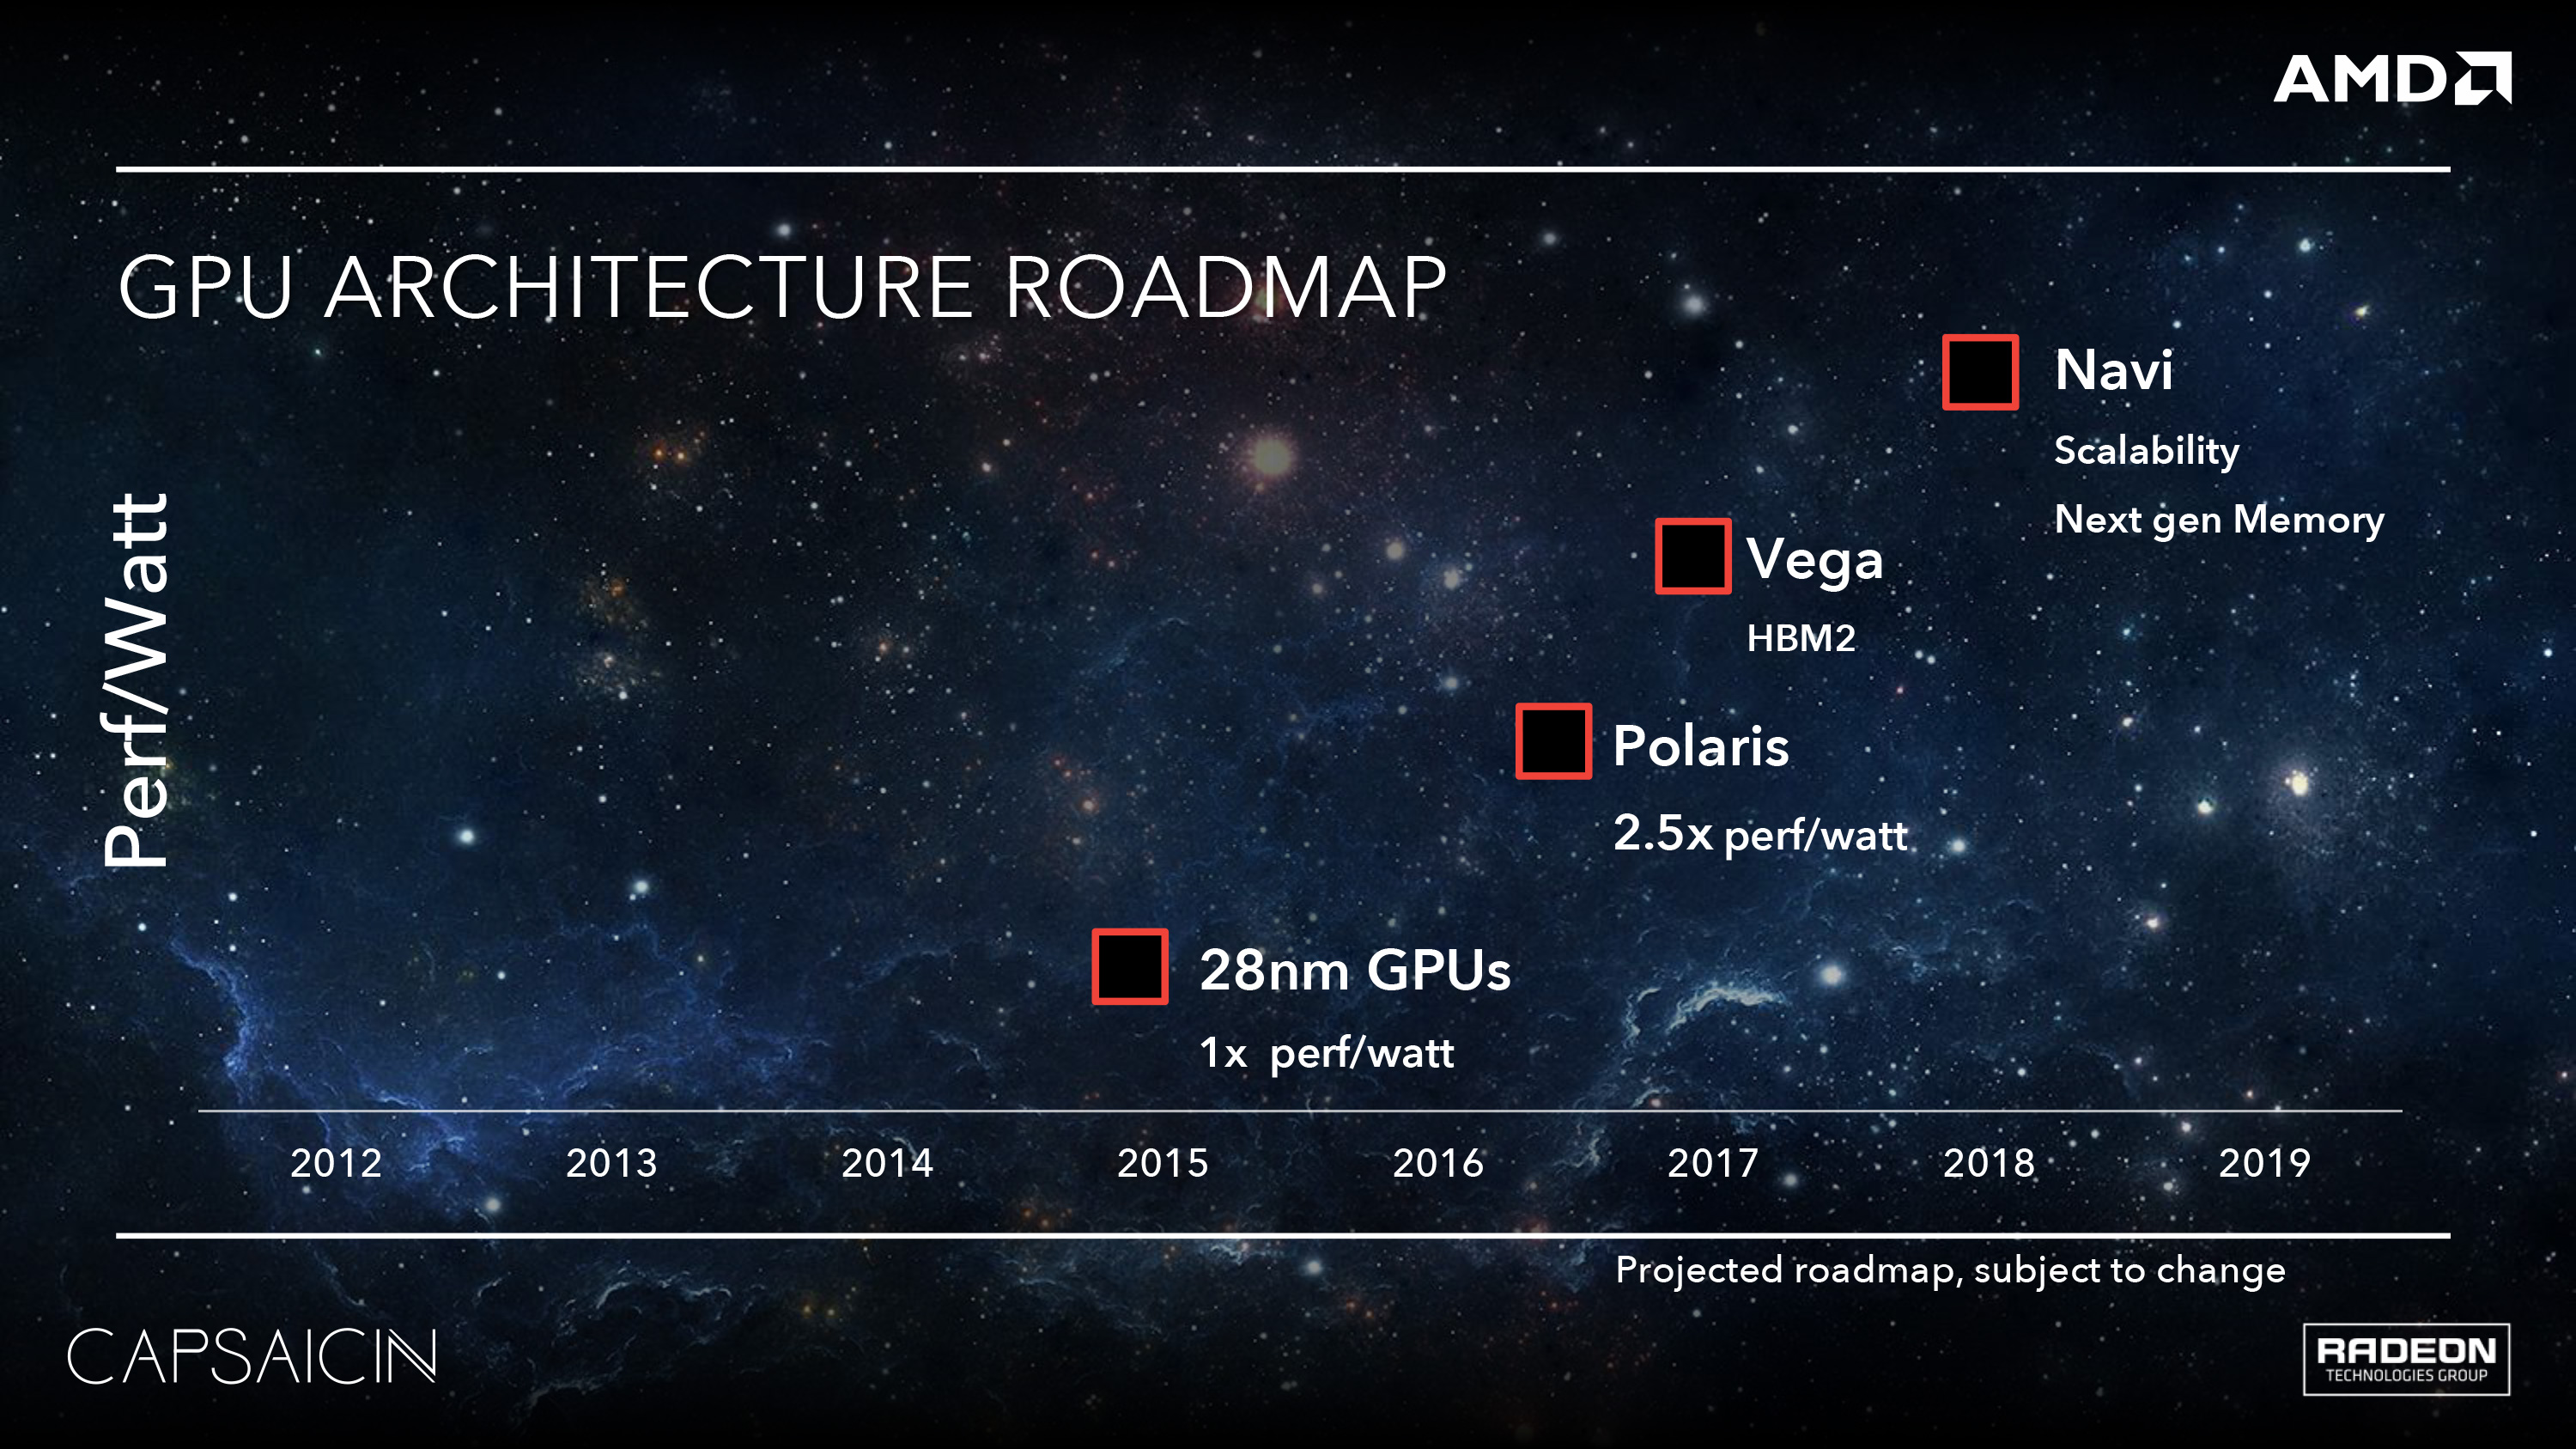 Risorsa grafica - foto, screenshot o immagine in genere - relativa ai contenuti pubblicati da amdzone.it | Nome immagine: news3548_AMD-GPU-Architecture-Roadmap_1.jpg